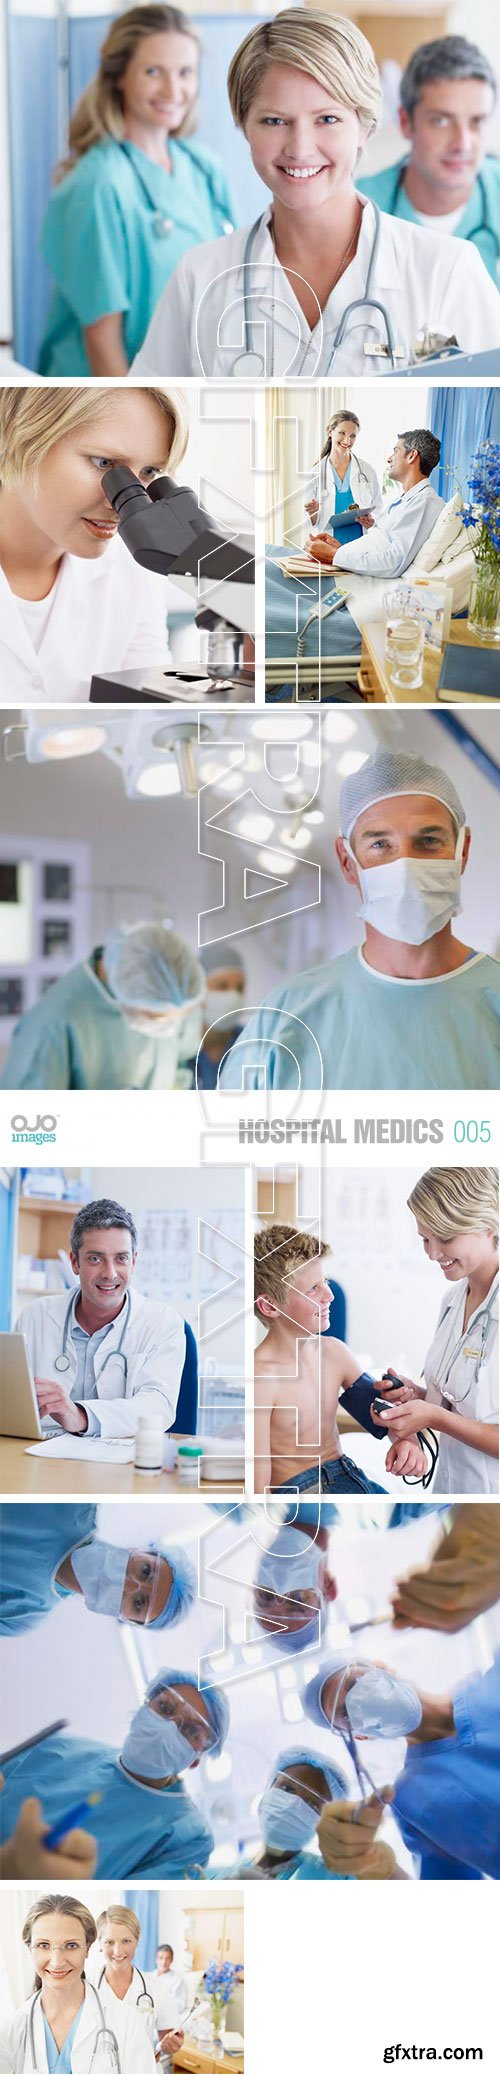 OJO Images OJ005 Hospital Medics